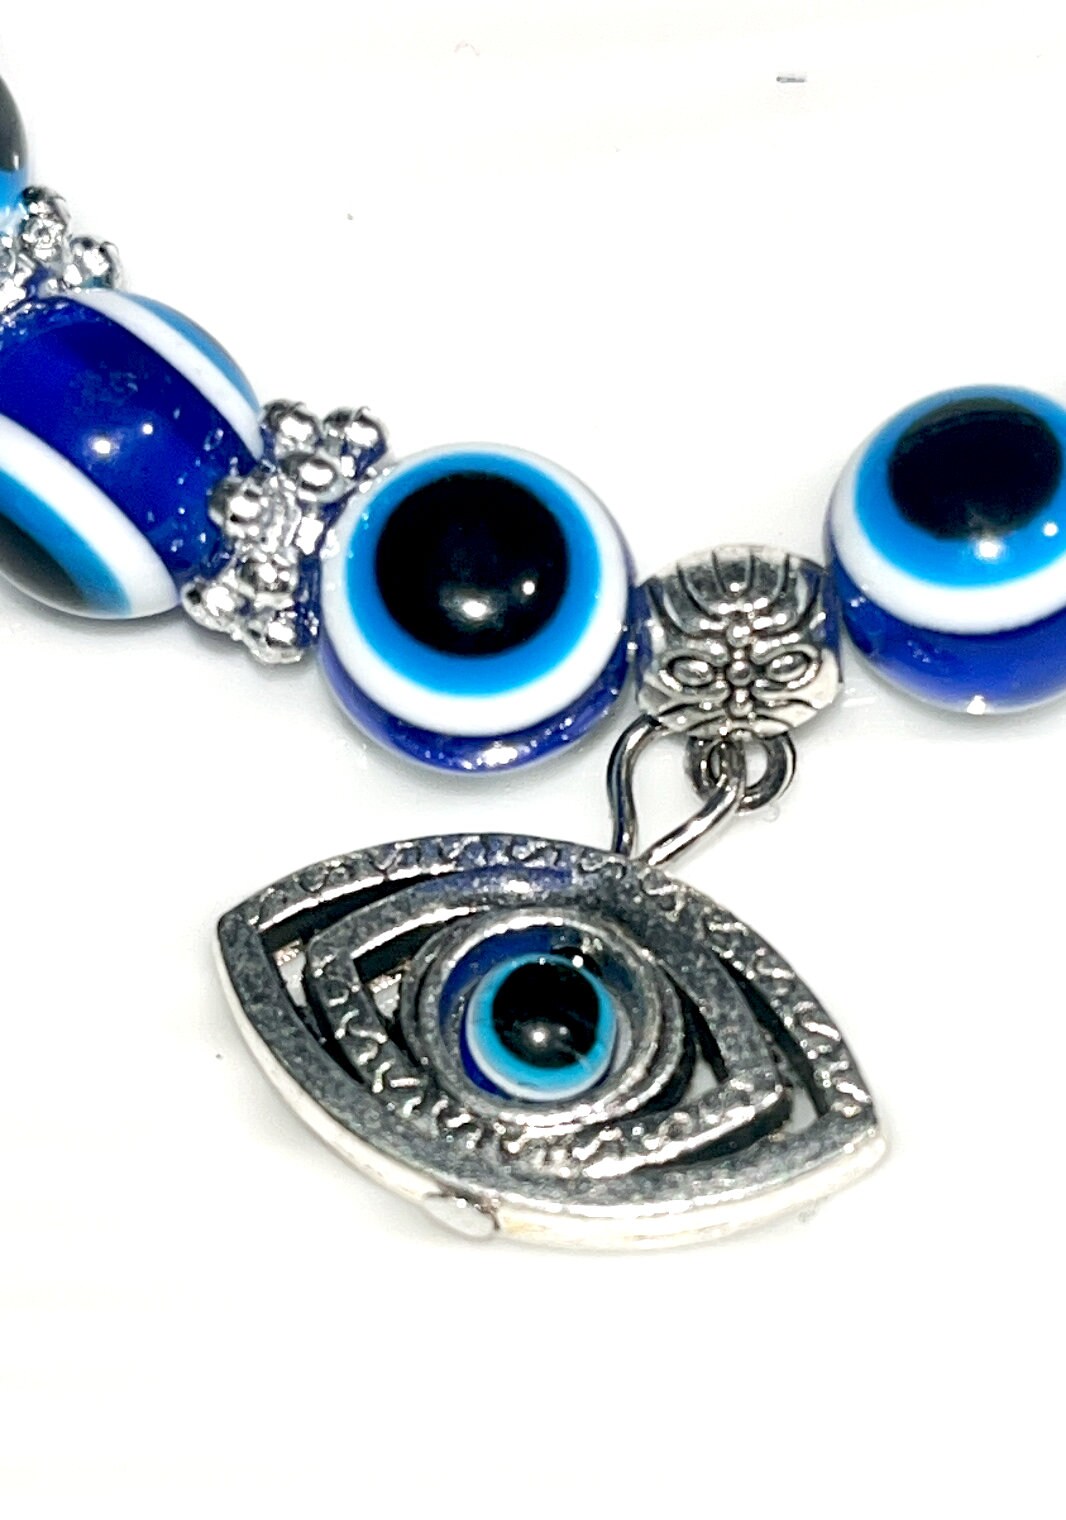 Blue evil eye bracelets with Hamsa hand symbol charm and blue evil eye charm, 8 mm beads